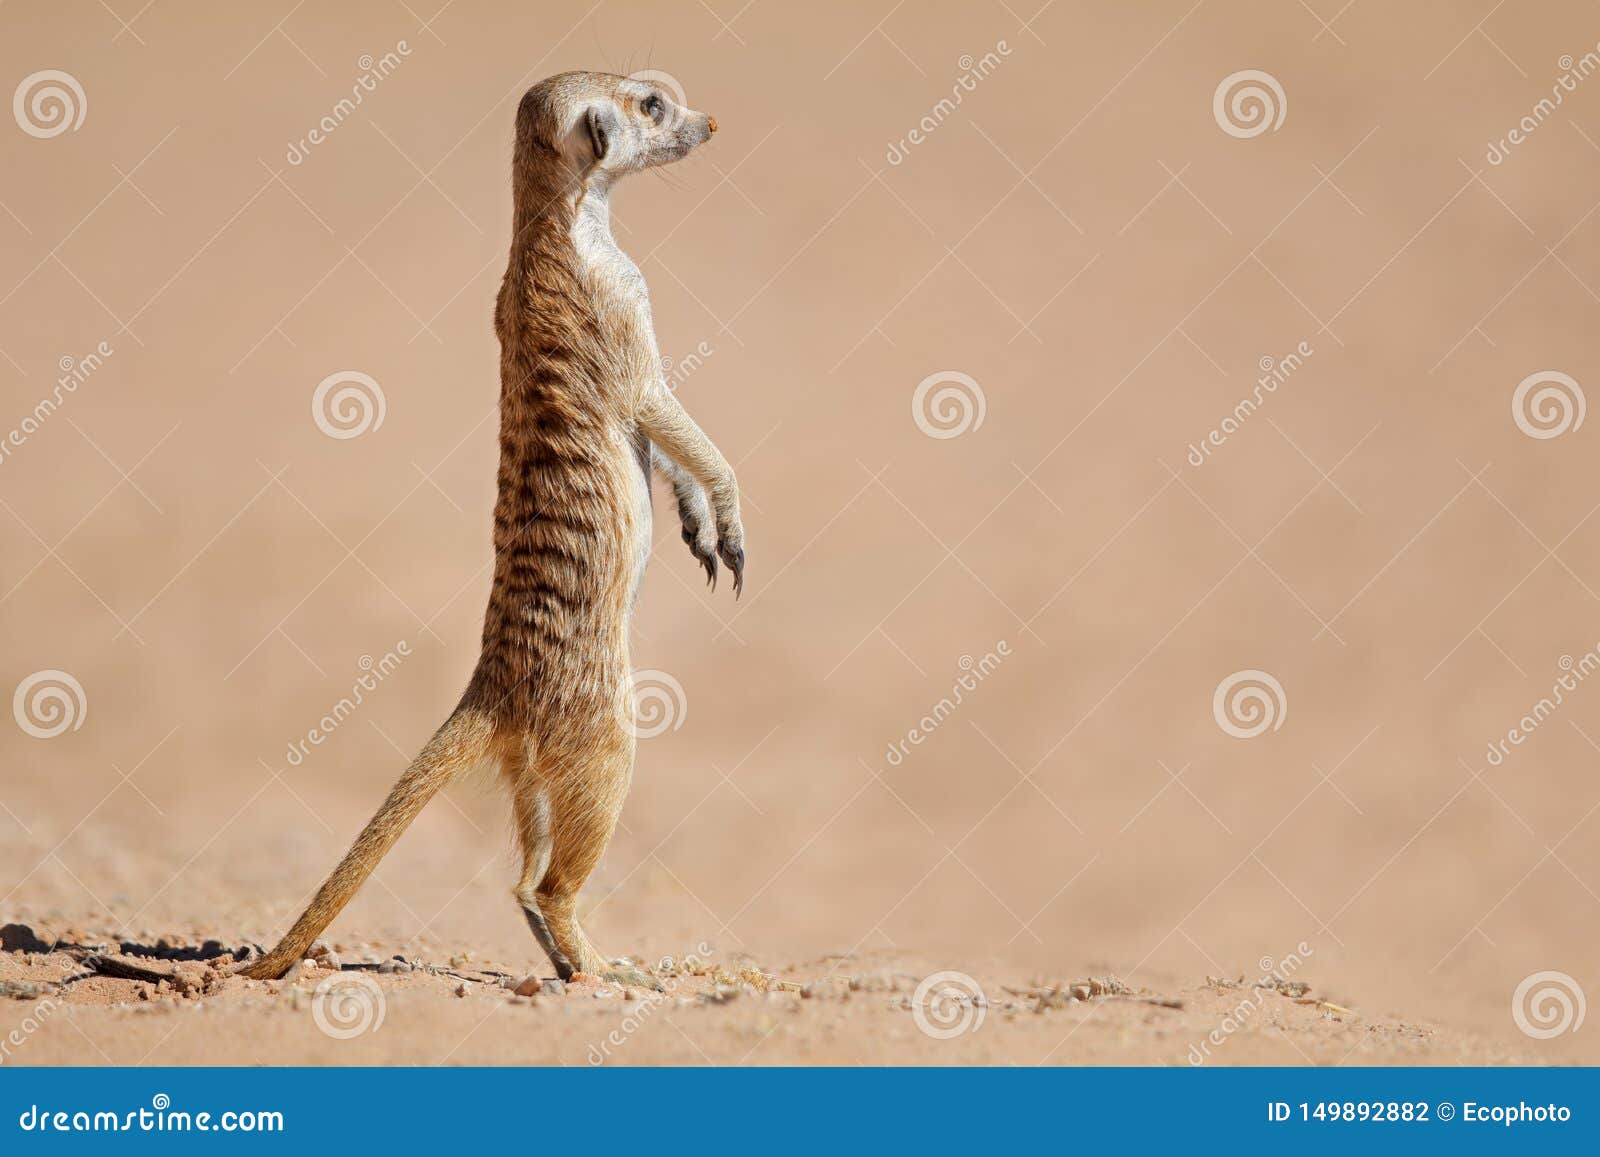 meerkat standing on guard - kalahari desert